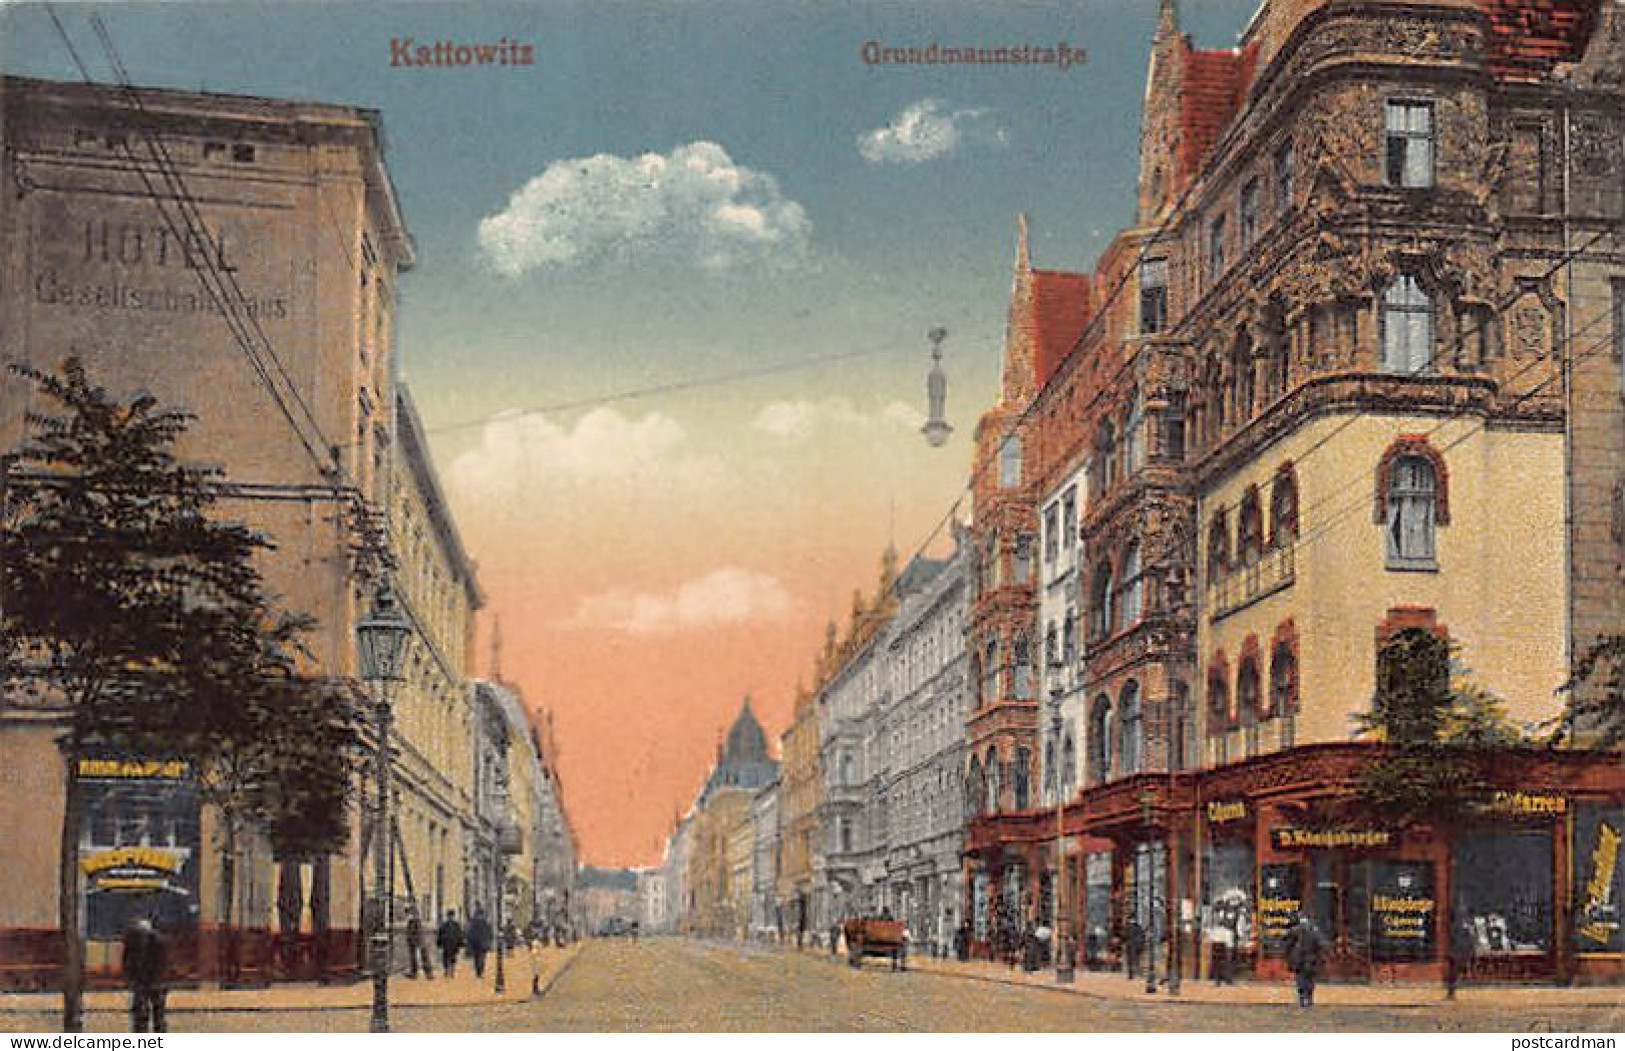 Poland - KATOWICE Kattowitz - Grundmannstrasse - Poland